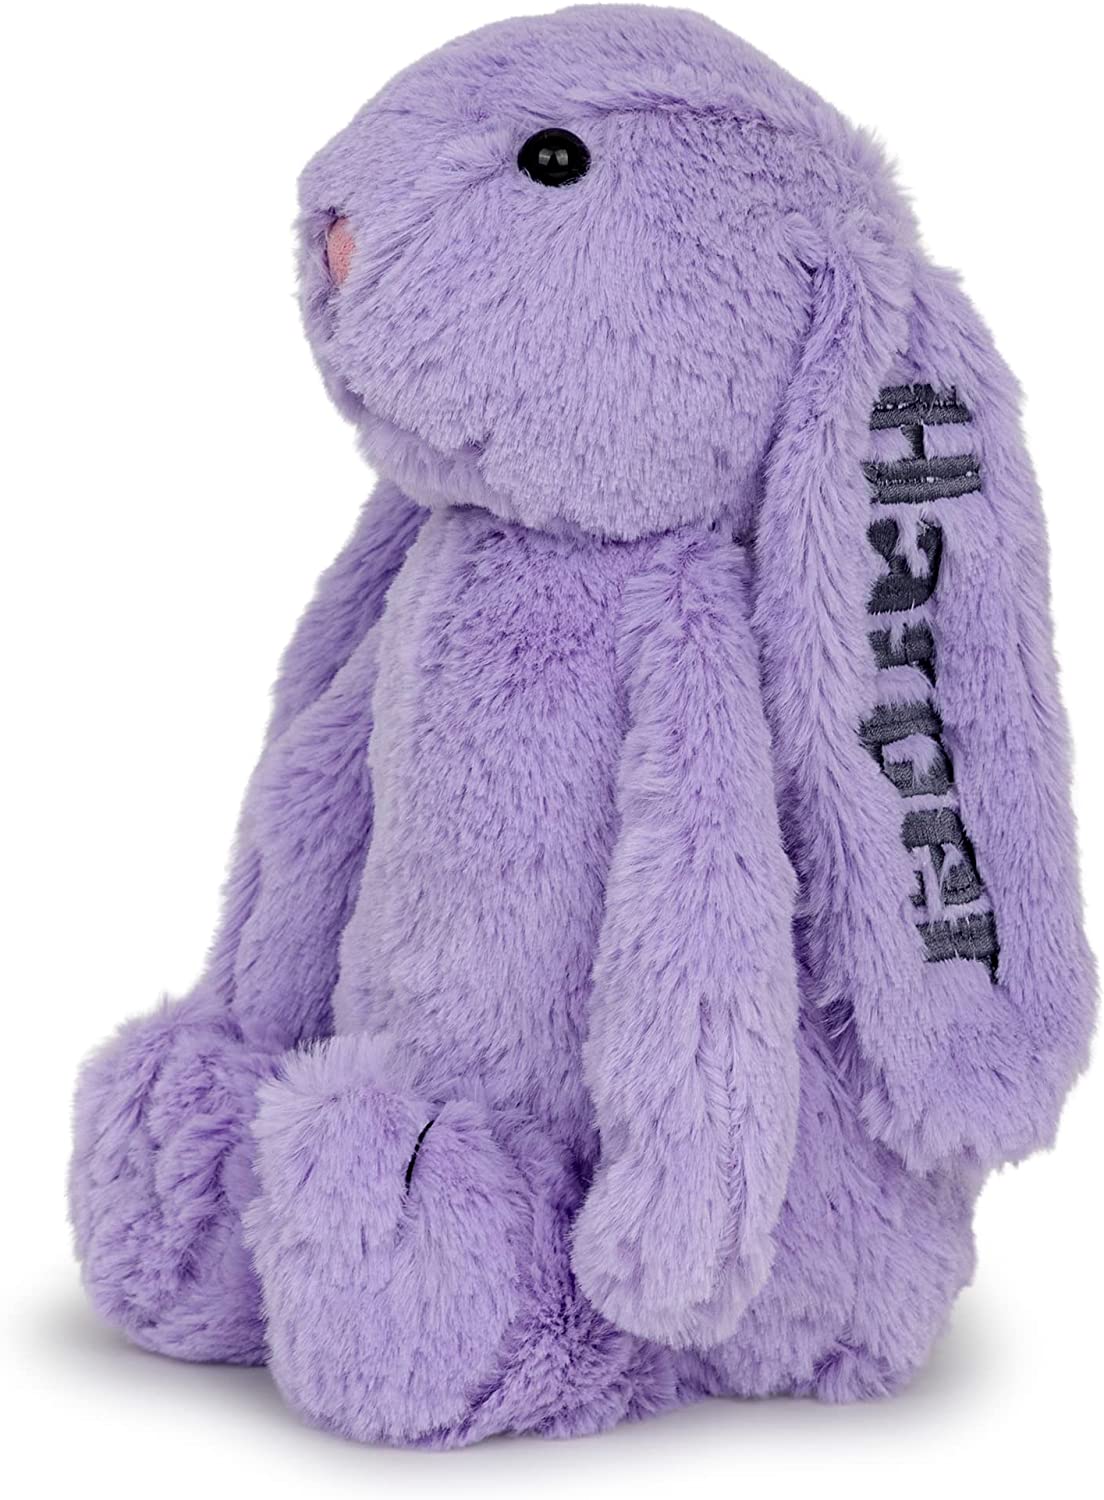 Personalized Stuffed Bunny Plush Toy 